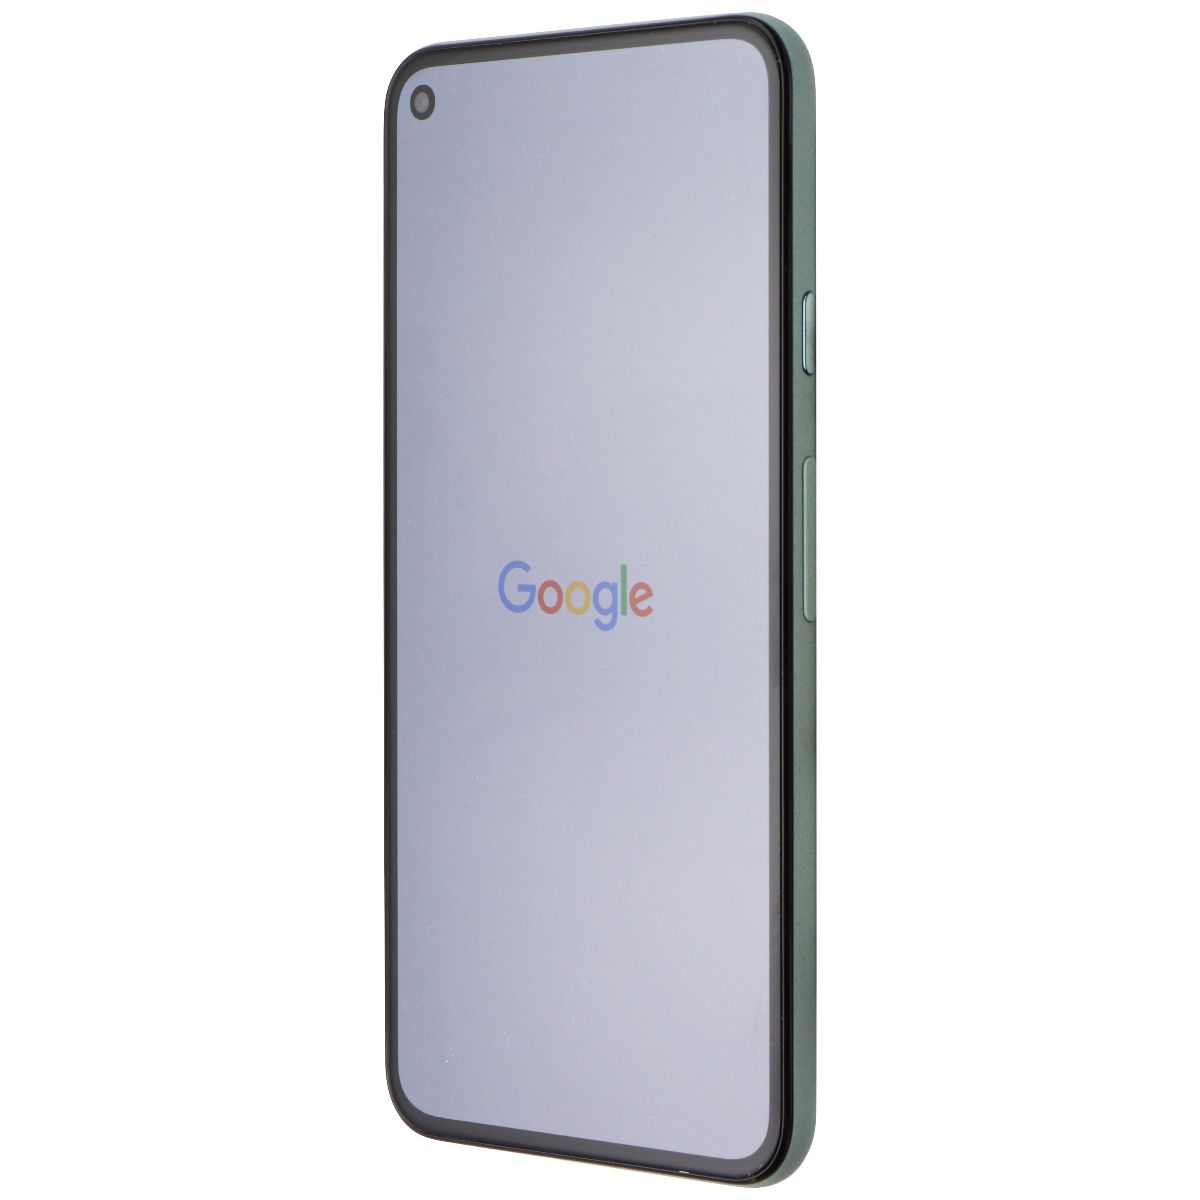 Google Pixel 5 (6-inch) Smartphone (GD1YQ) Verizon - 128GB / Sorta Sage